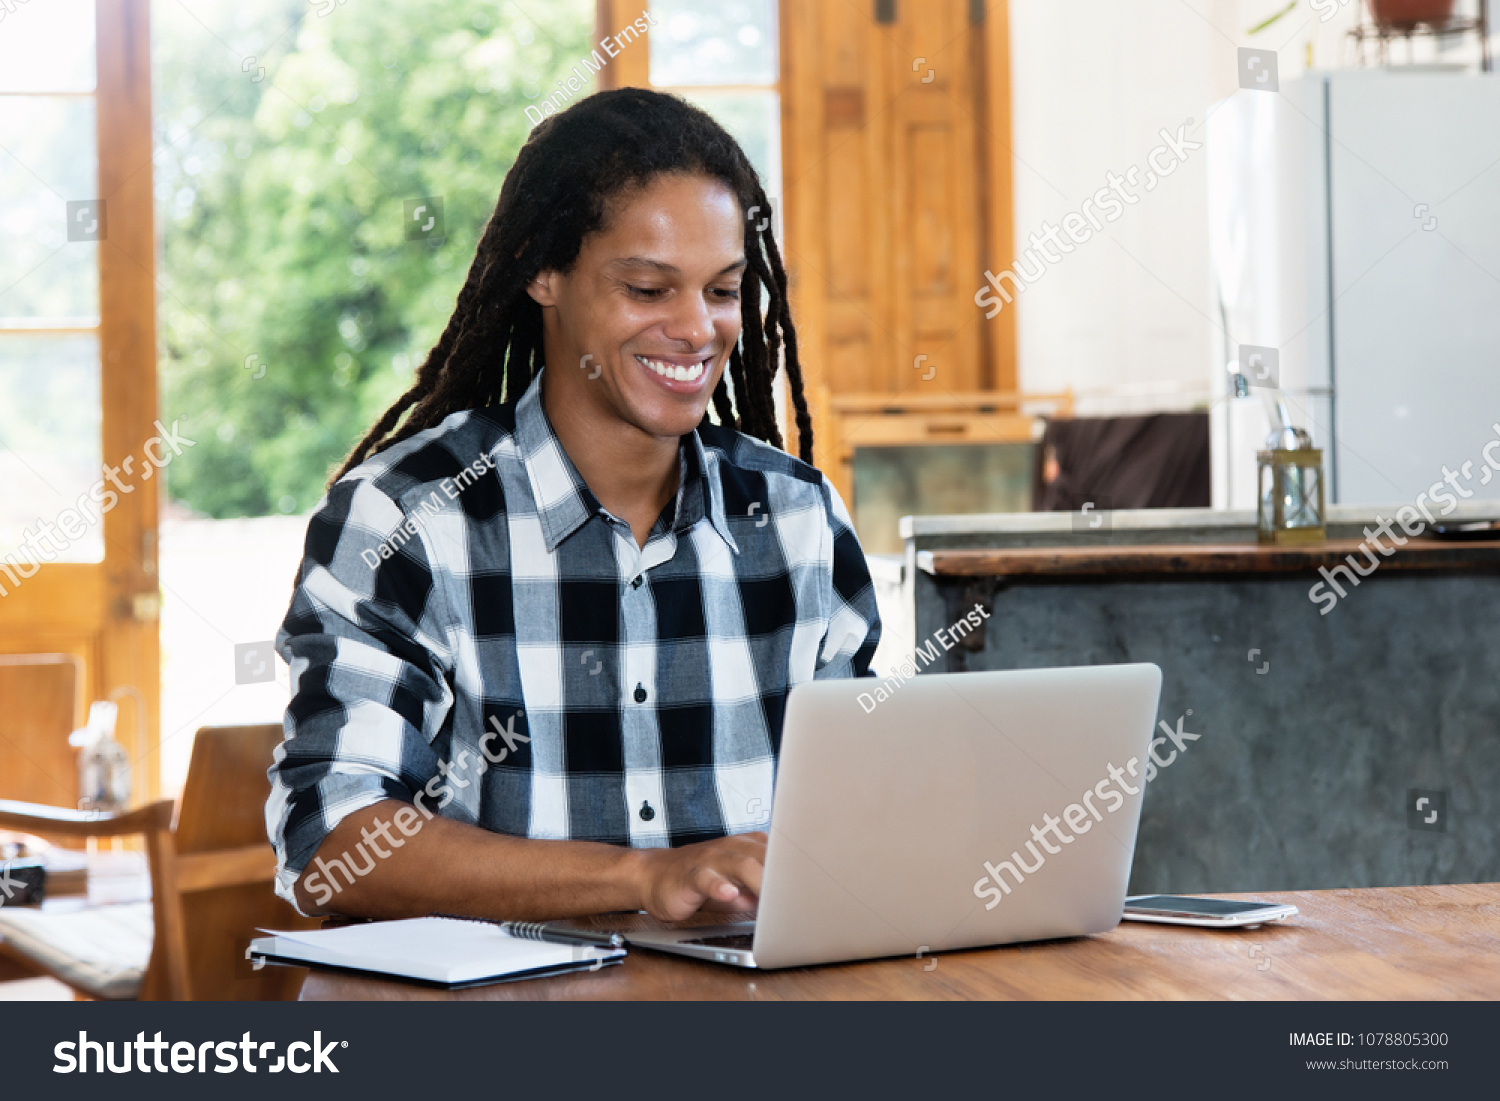 Creative latin american man with dreadlocks working at computer at home #1078805300